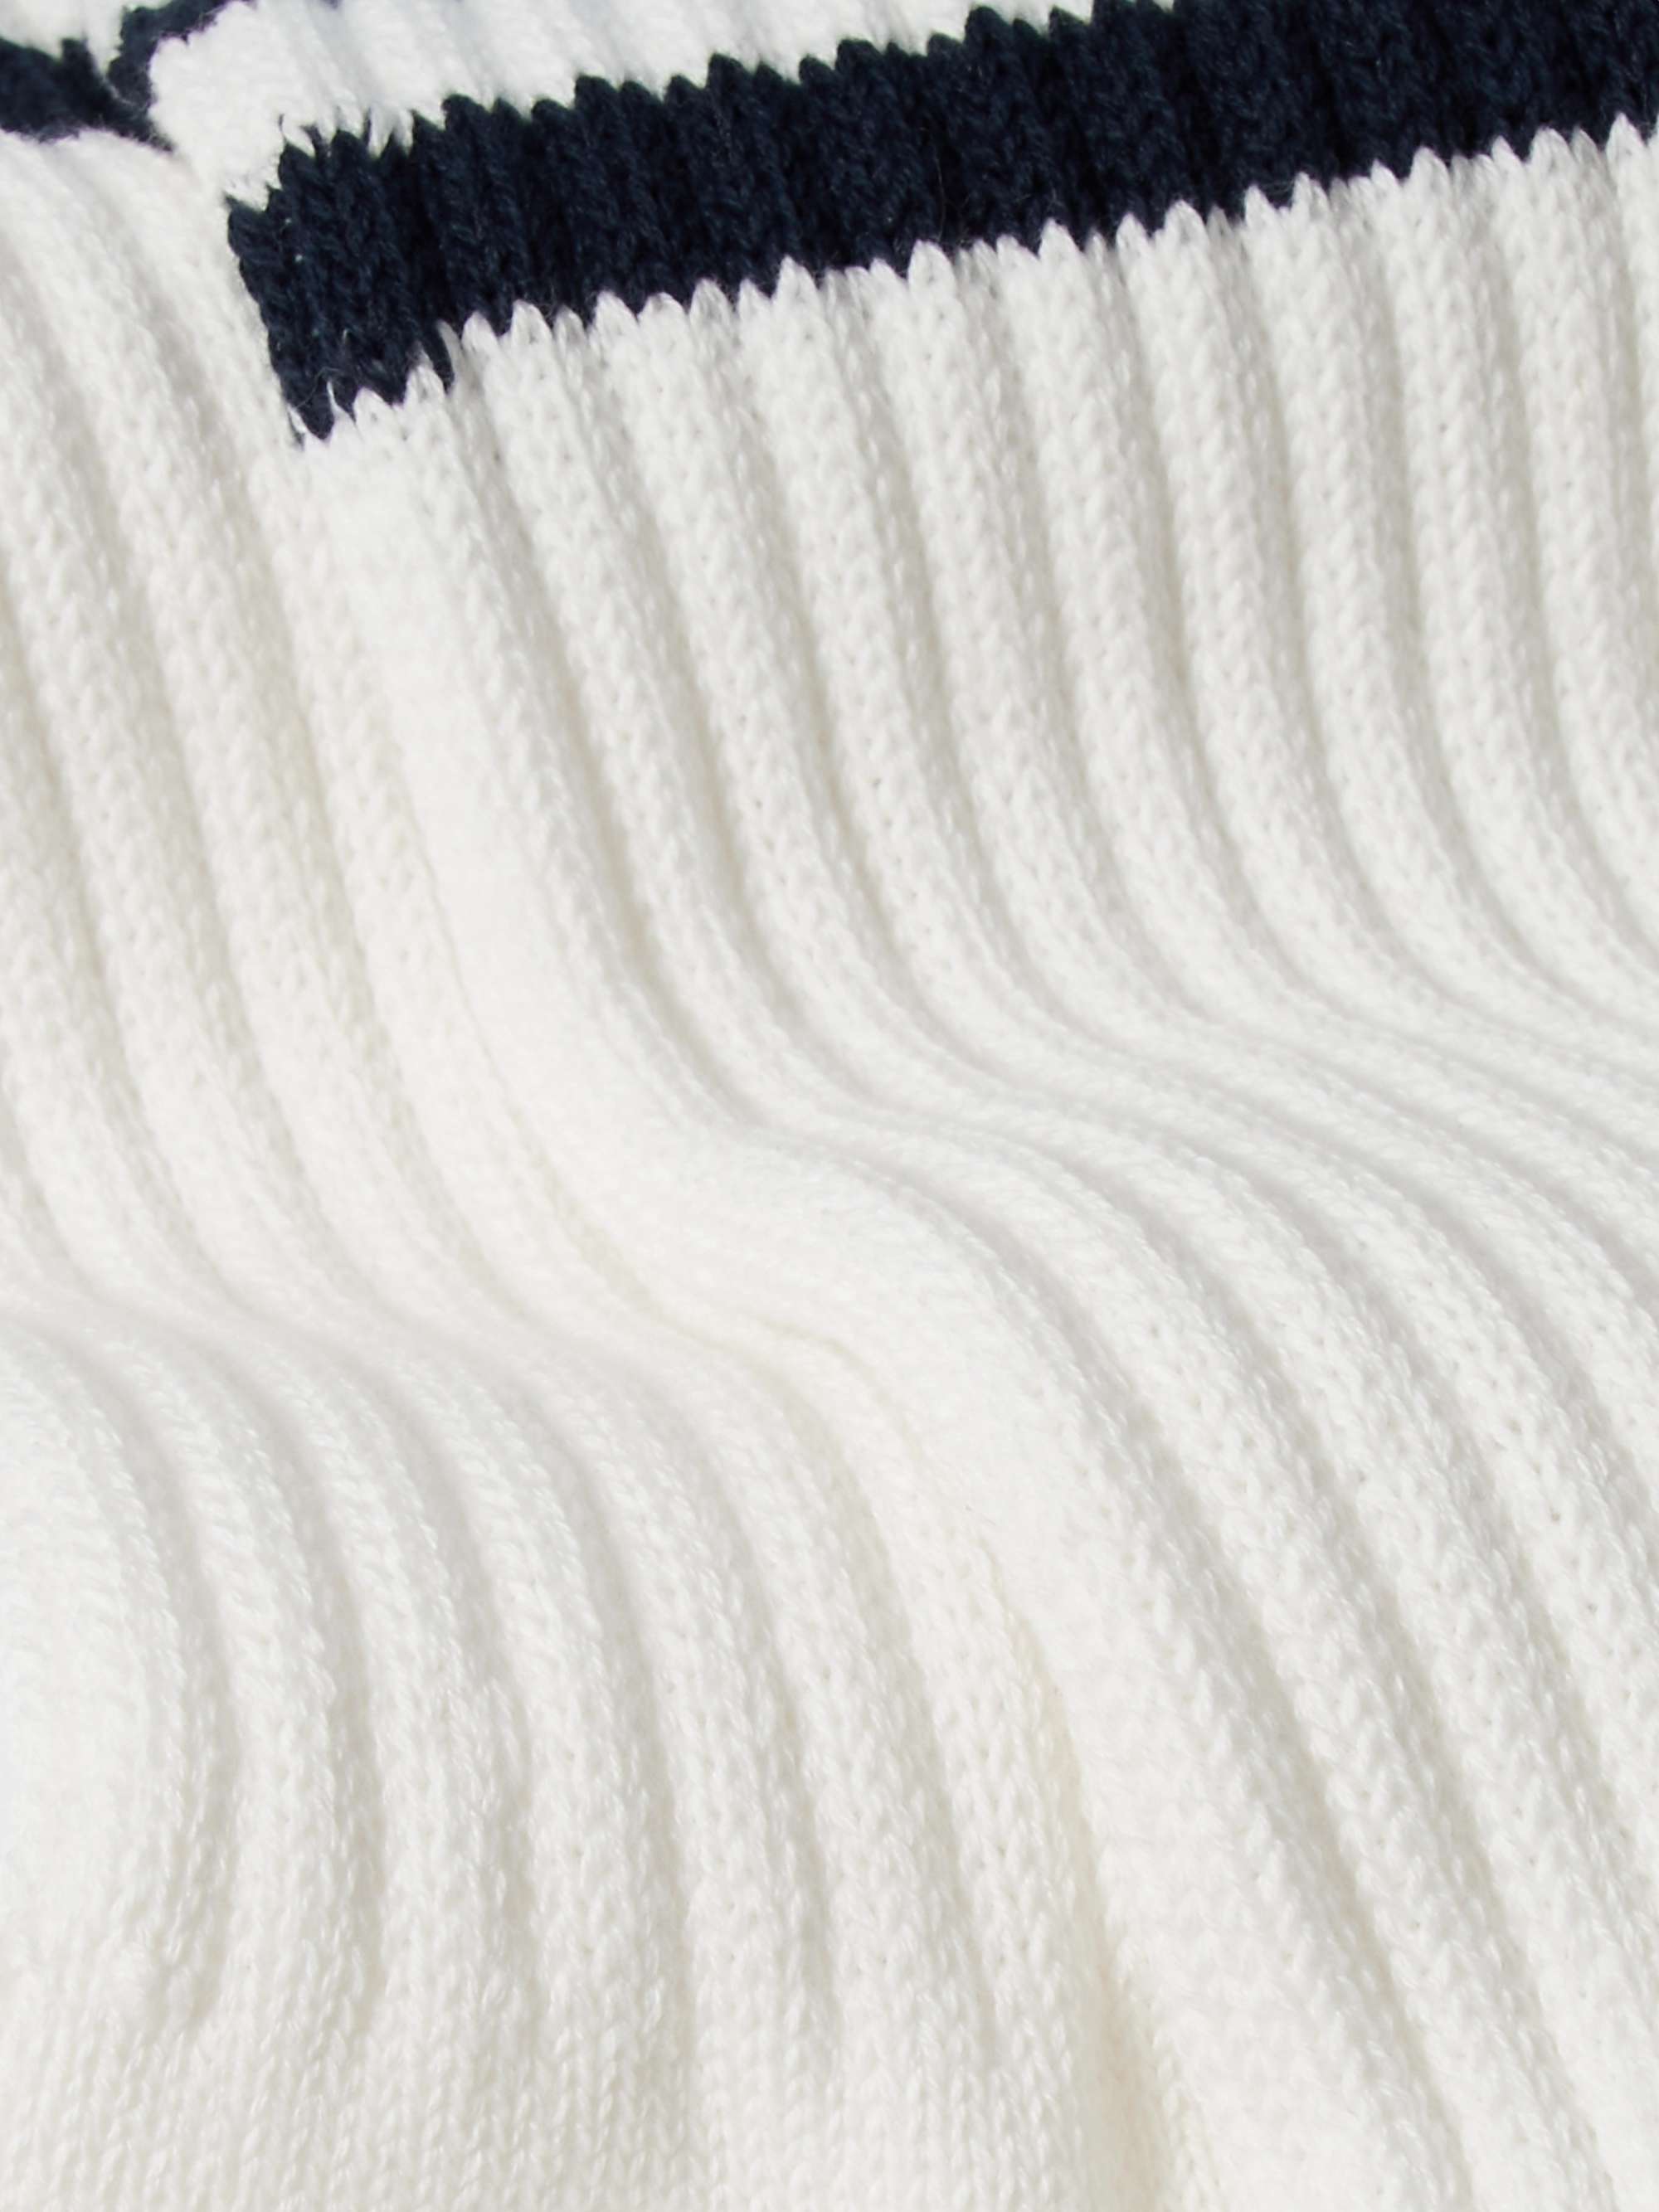 BEAMS PLUS Schoolboy Ribbed Cotton-Blend Socks